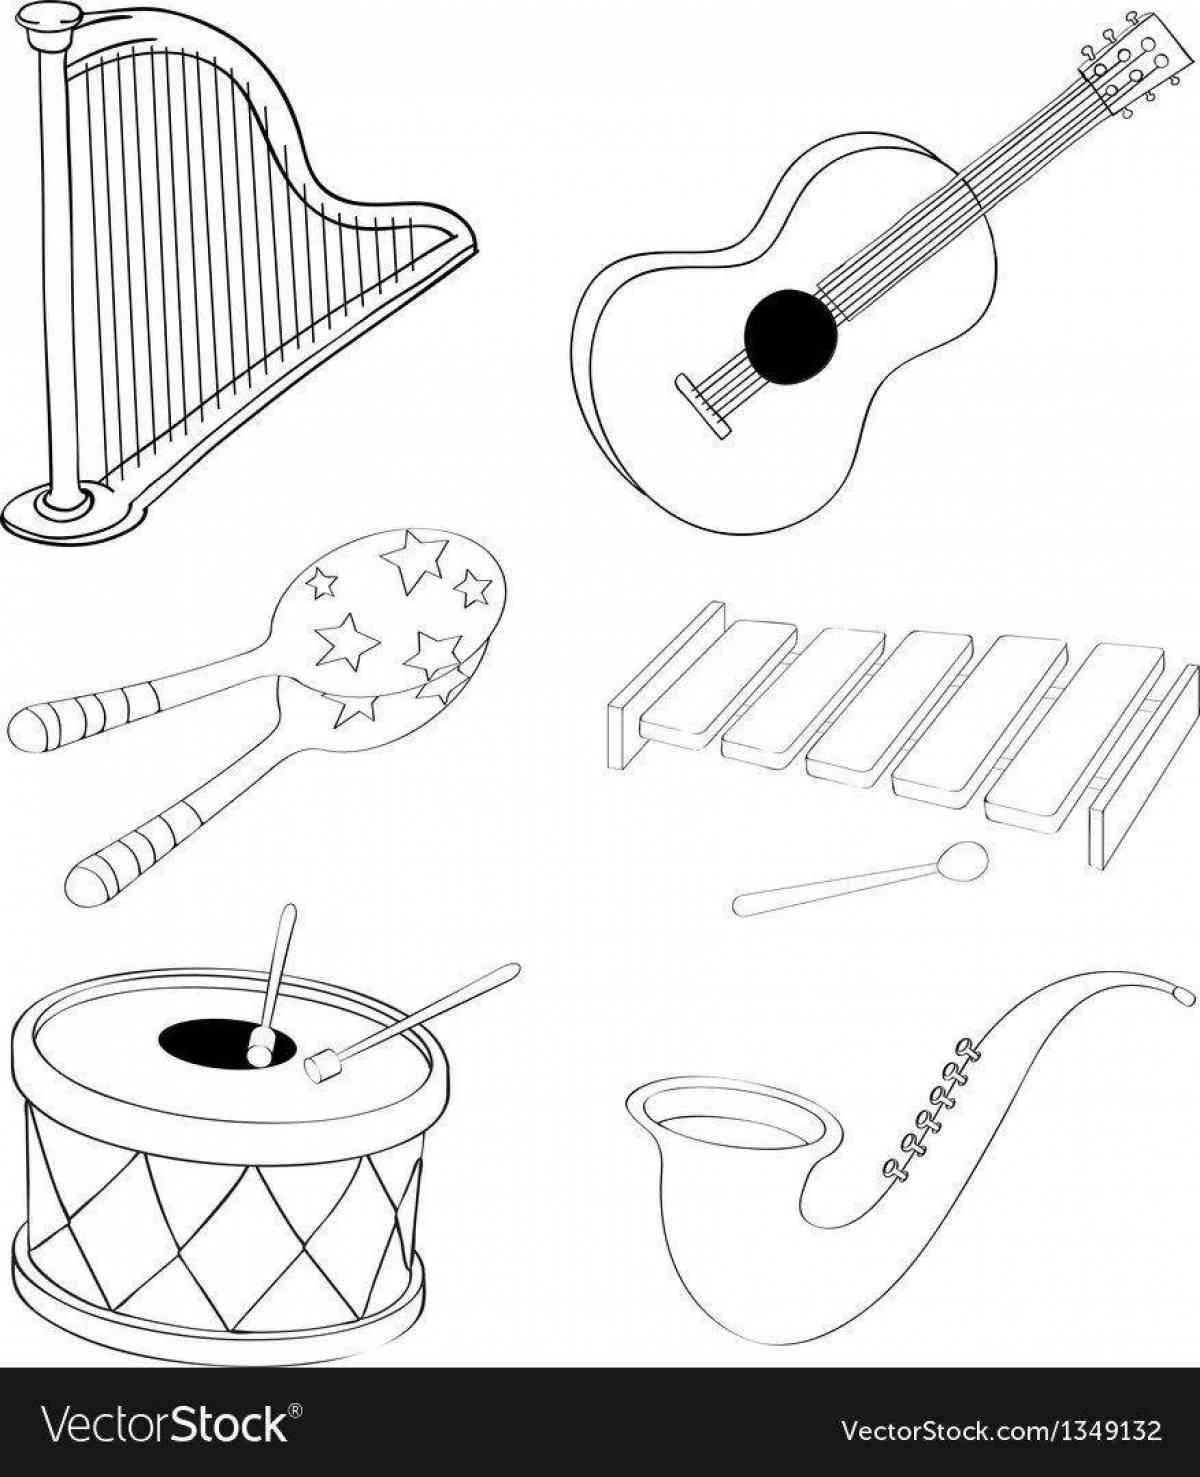 Musical instruments for preschoolers #3